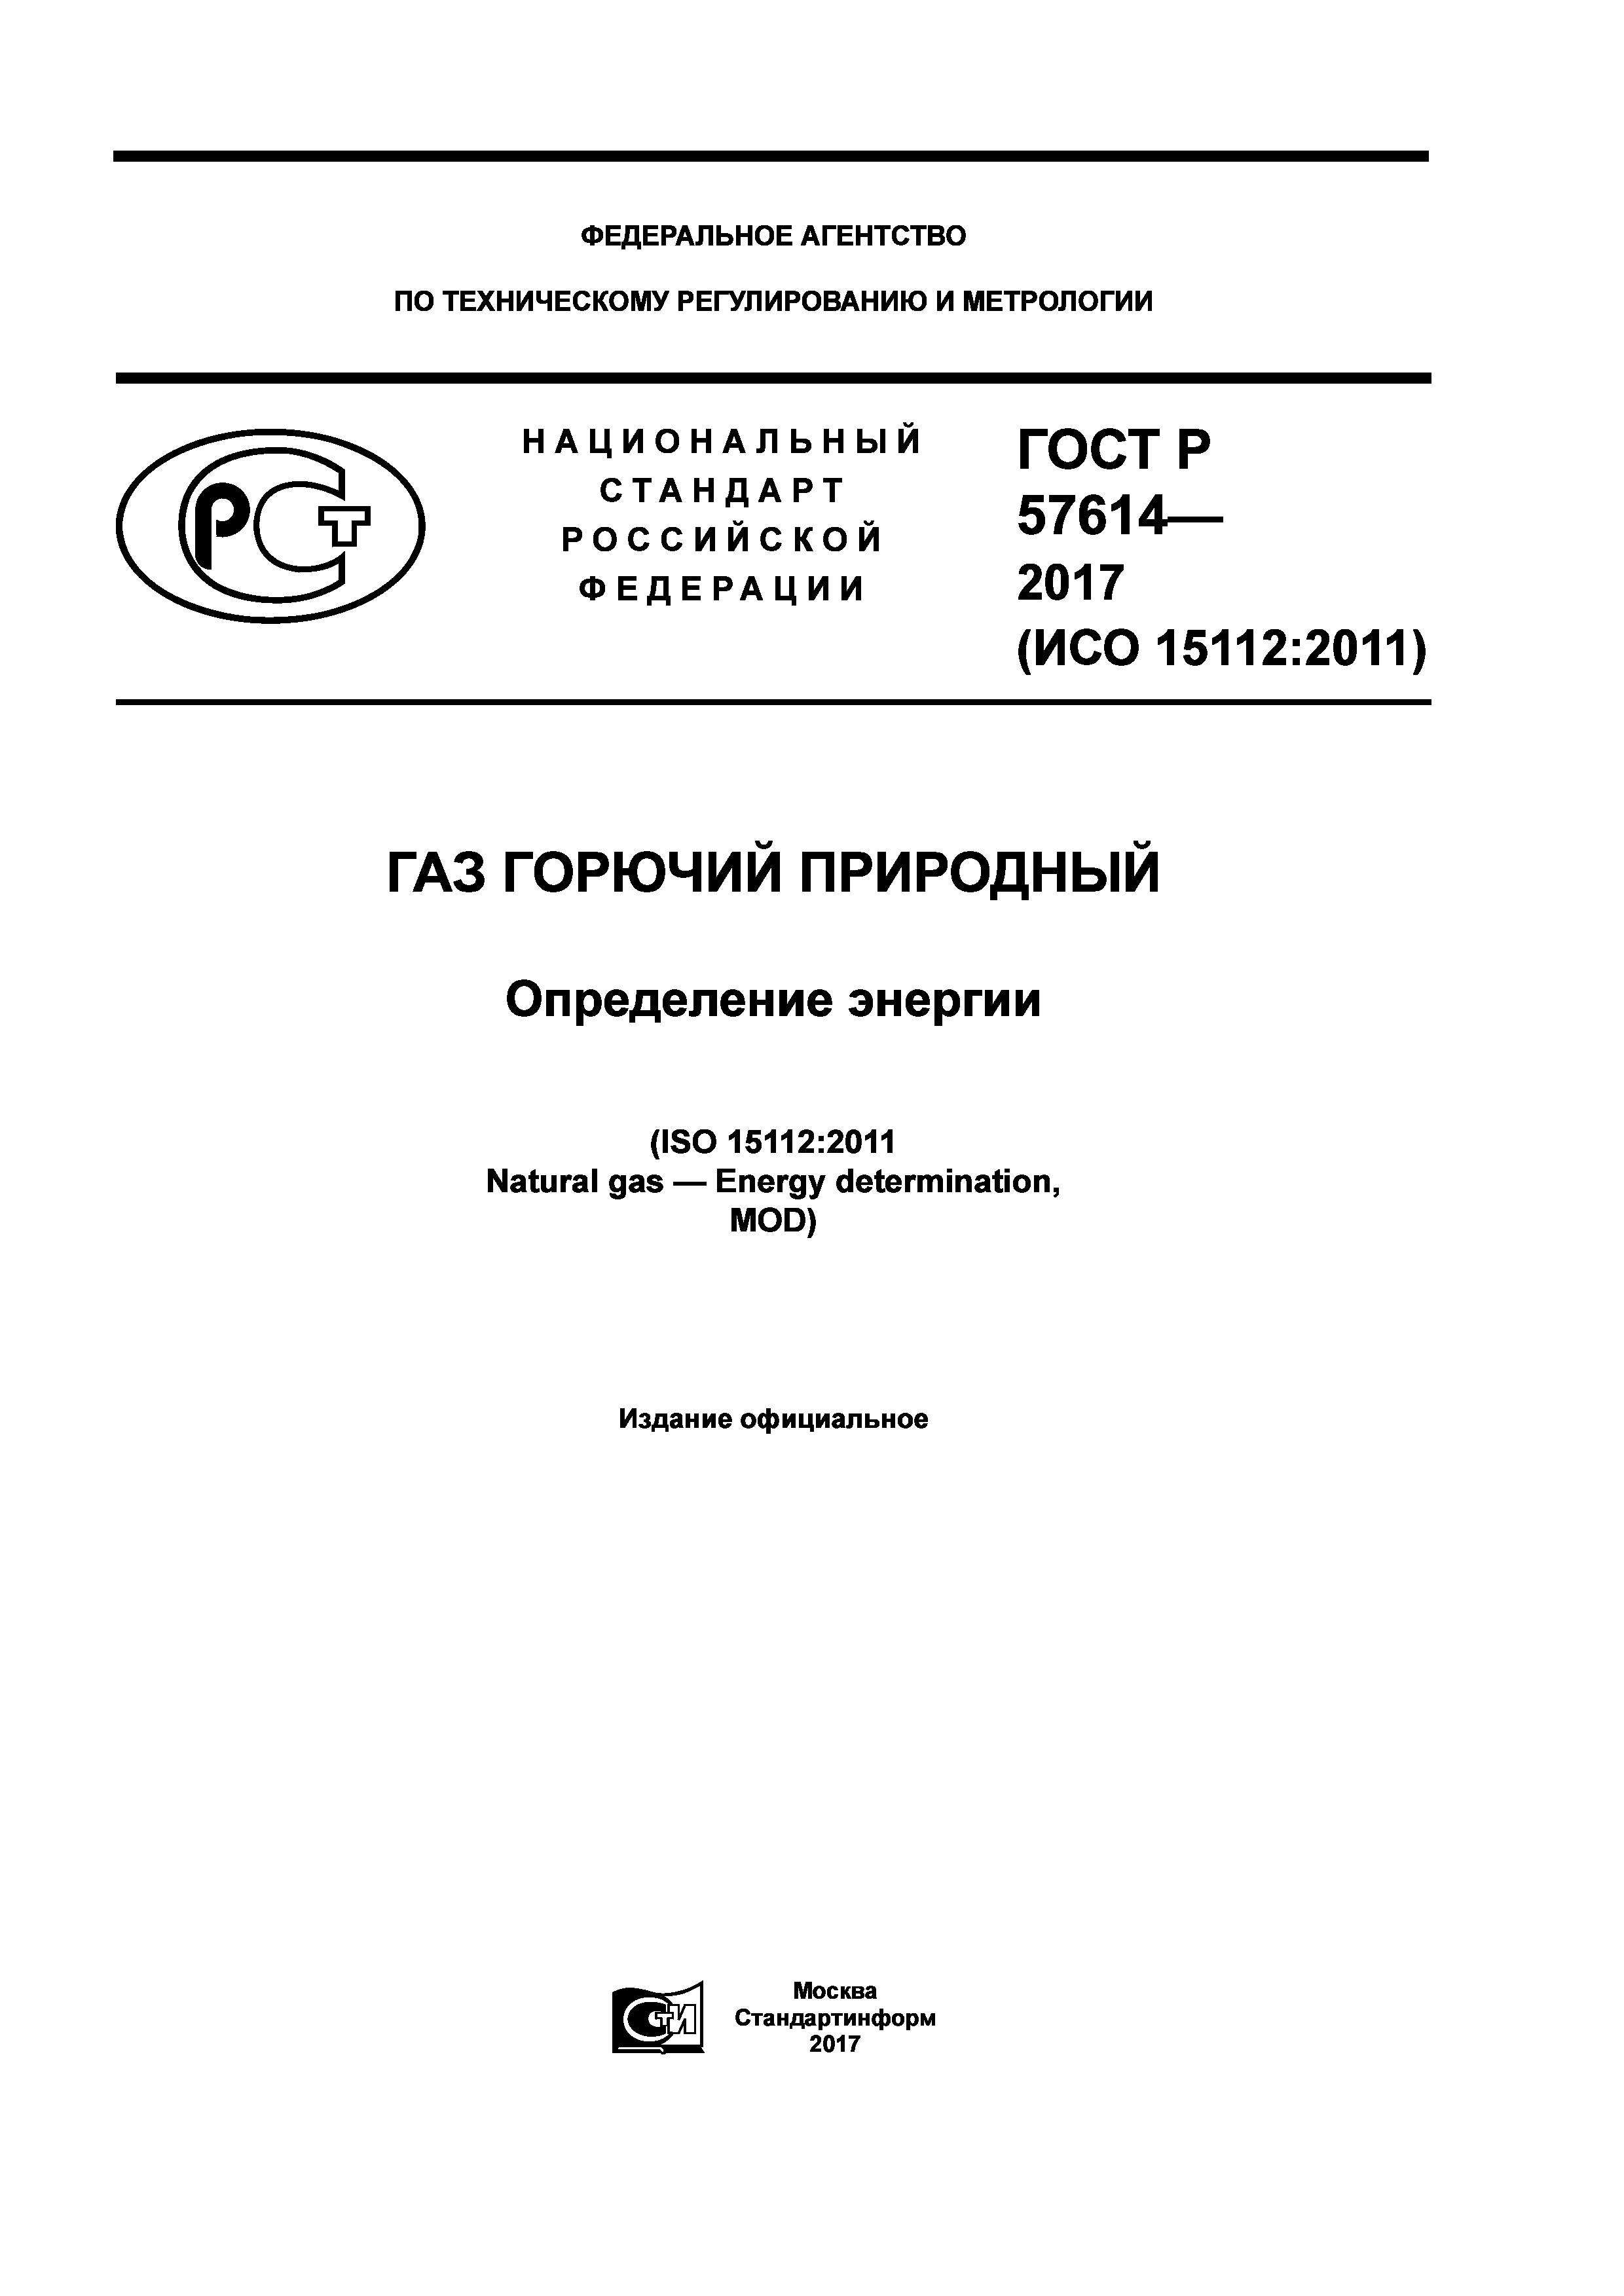 ГОСТ Р 57614-2017